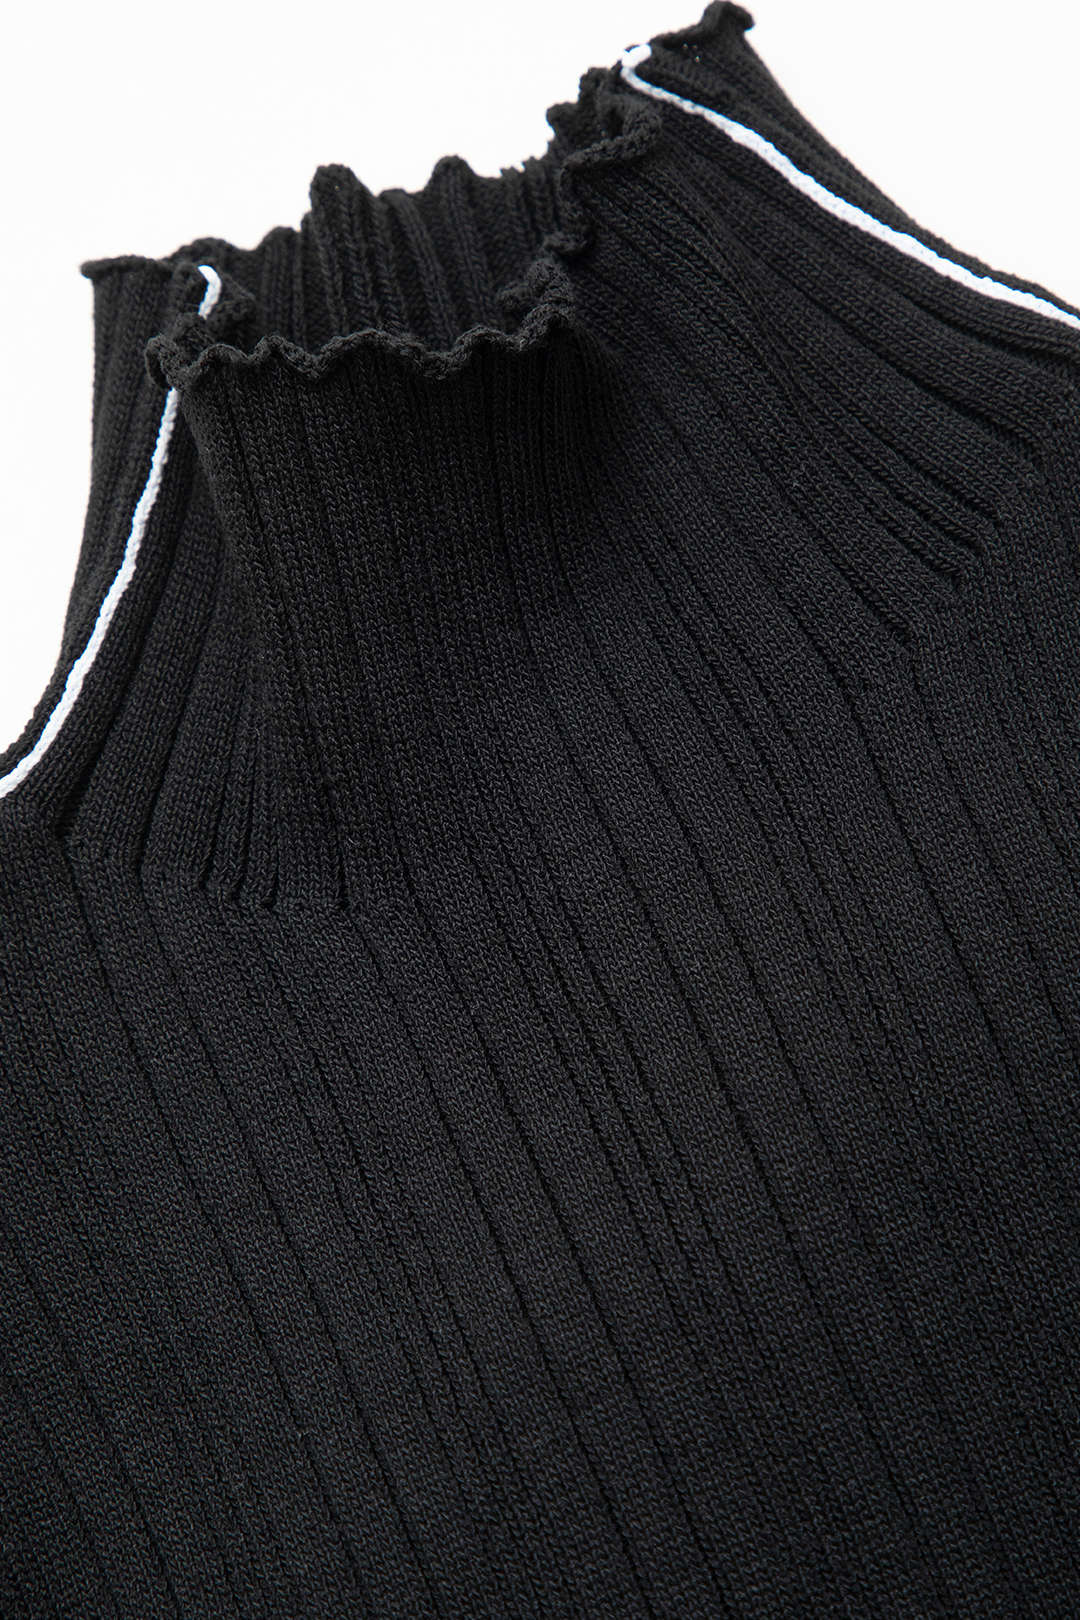 Contrast Line Mock Neck Long Sleeve Knit Top